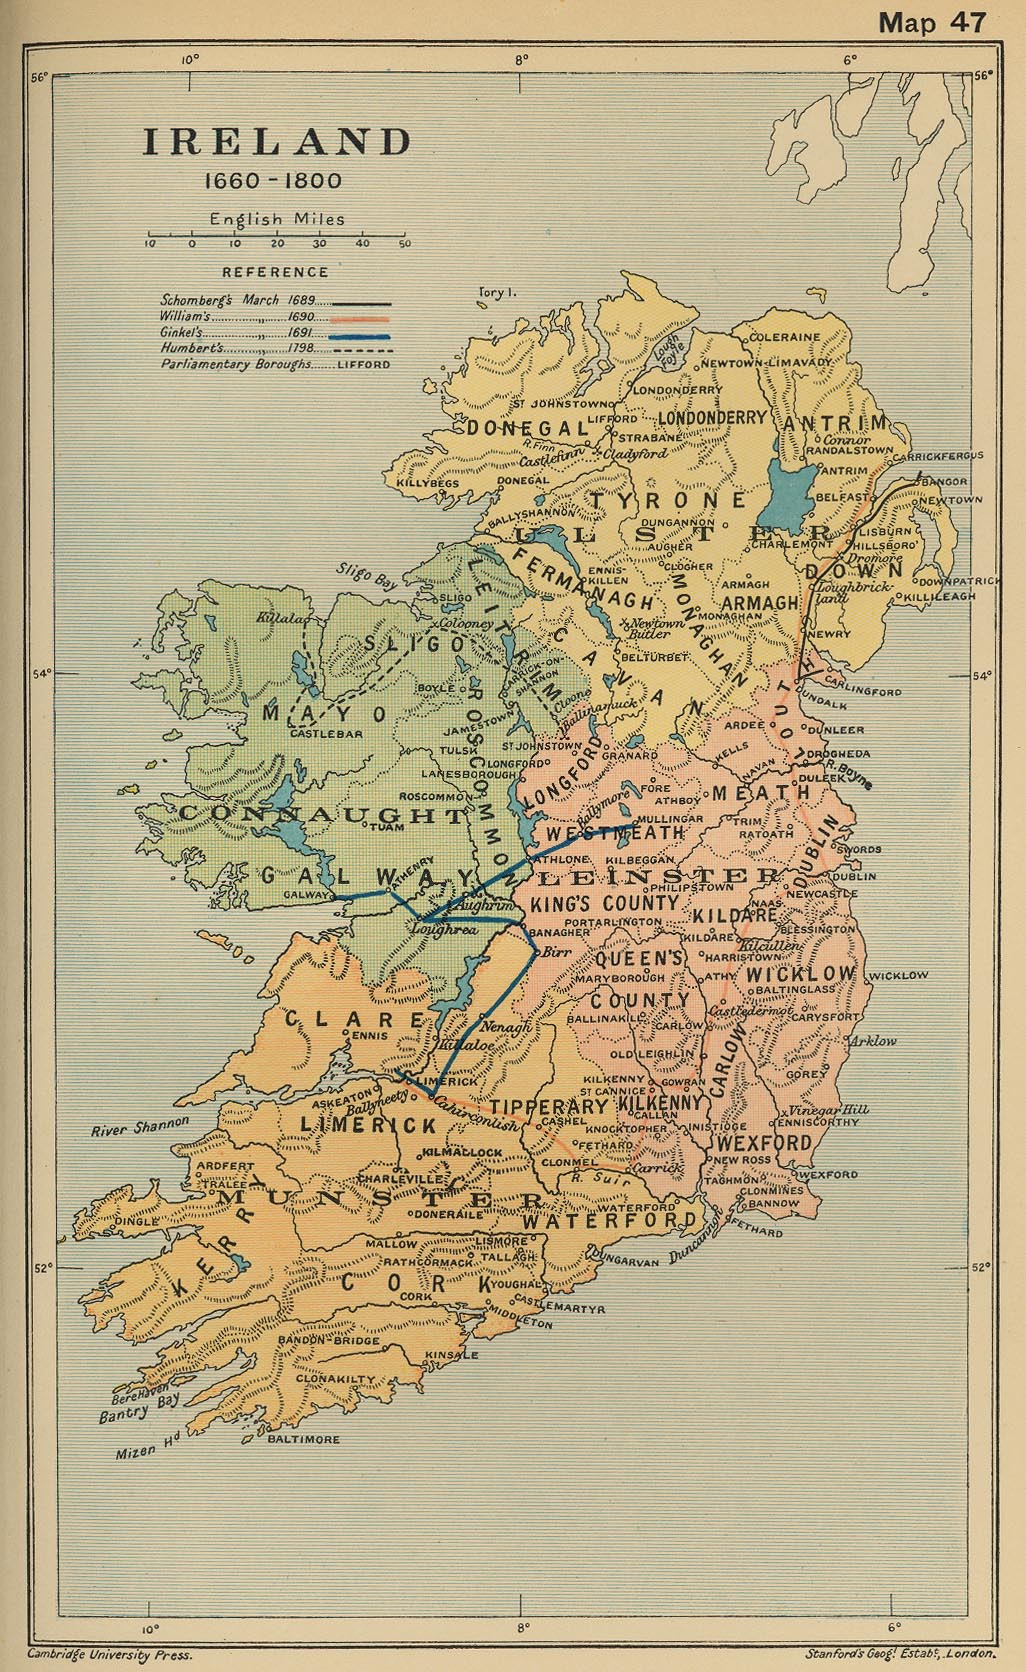 Map of Ireland 1660-1800